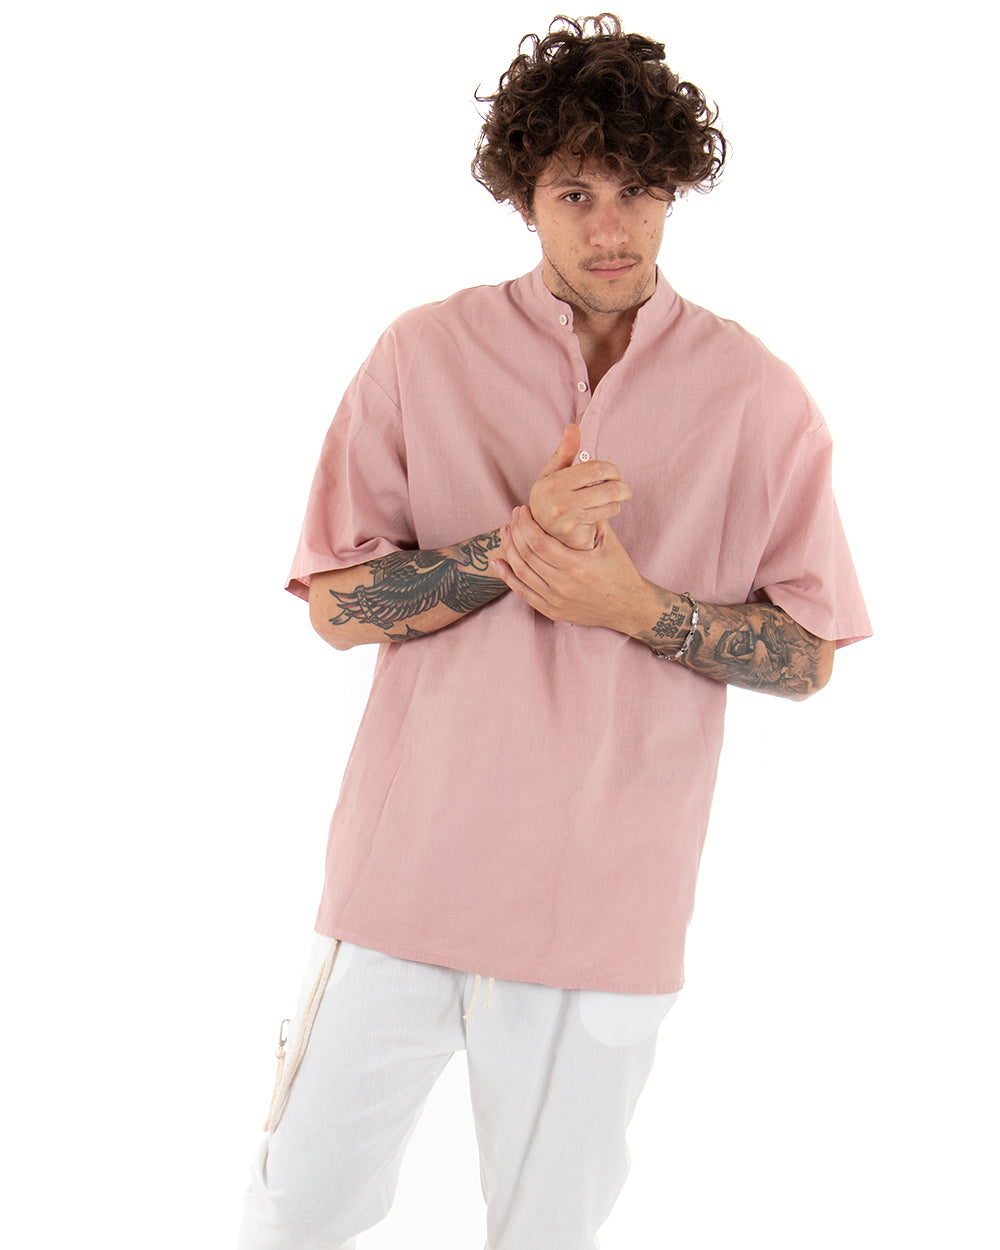 Men's Shirt Short Sleeve Solid Color Lilac Mandarin Collar Casual GIOSAL-CC1128A